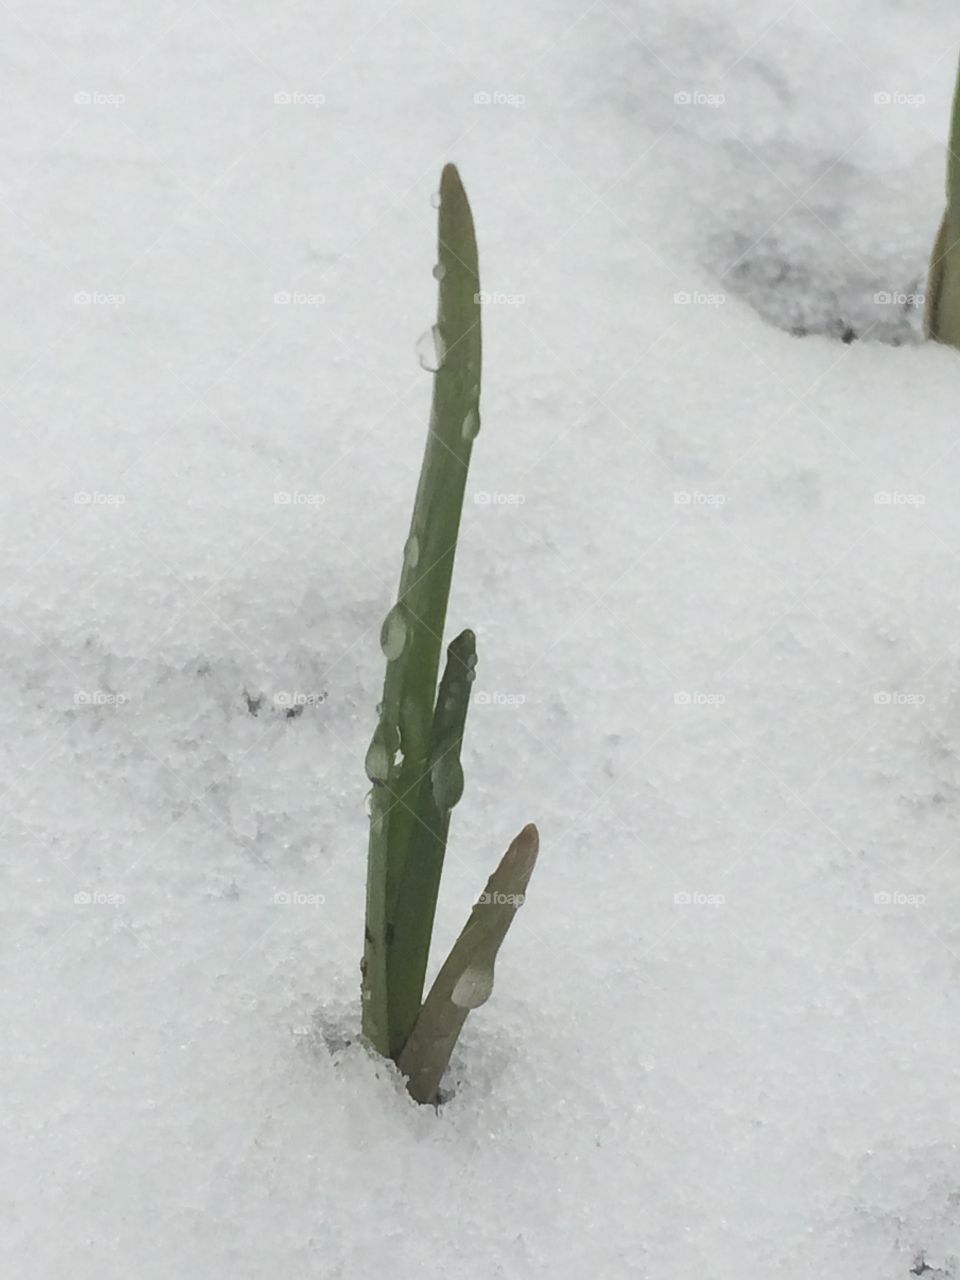 Sprout through snow